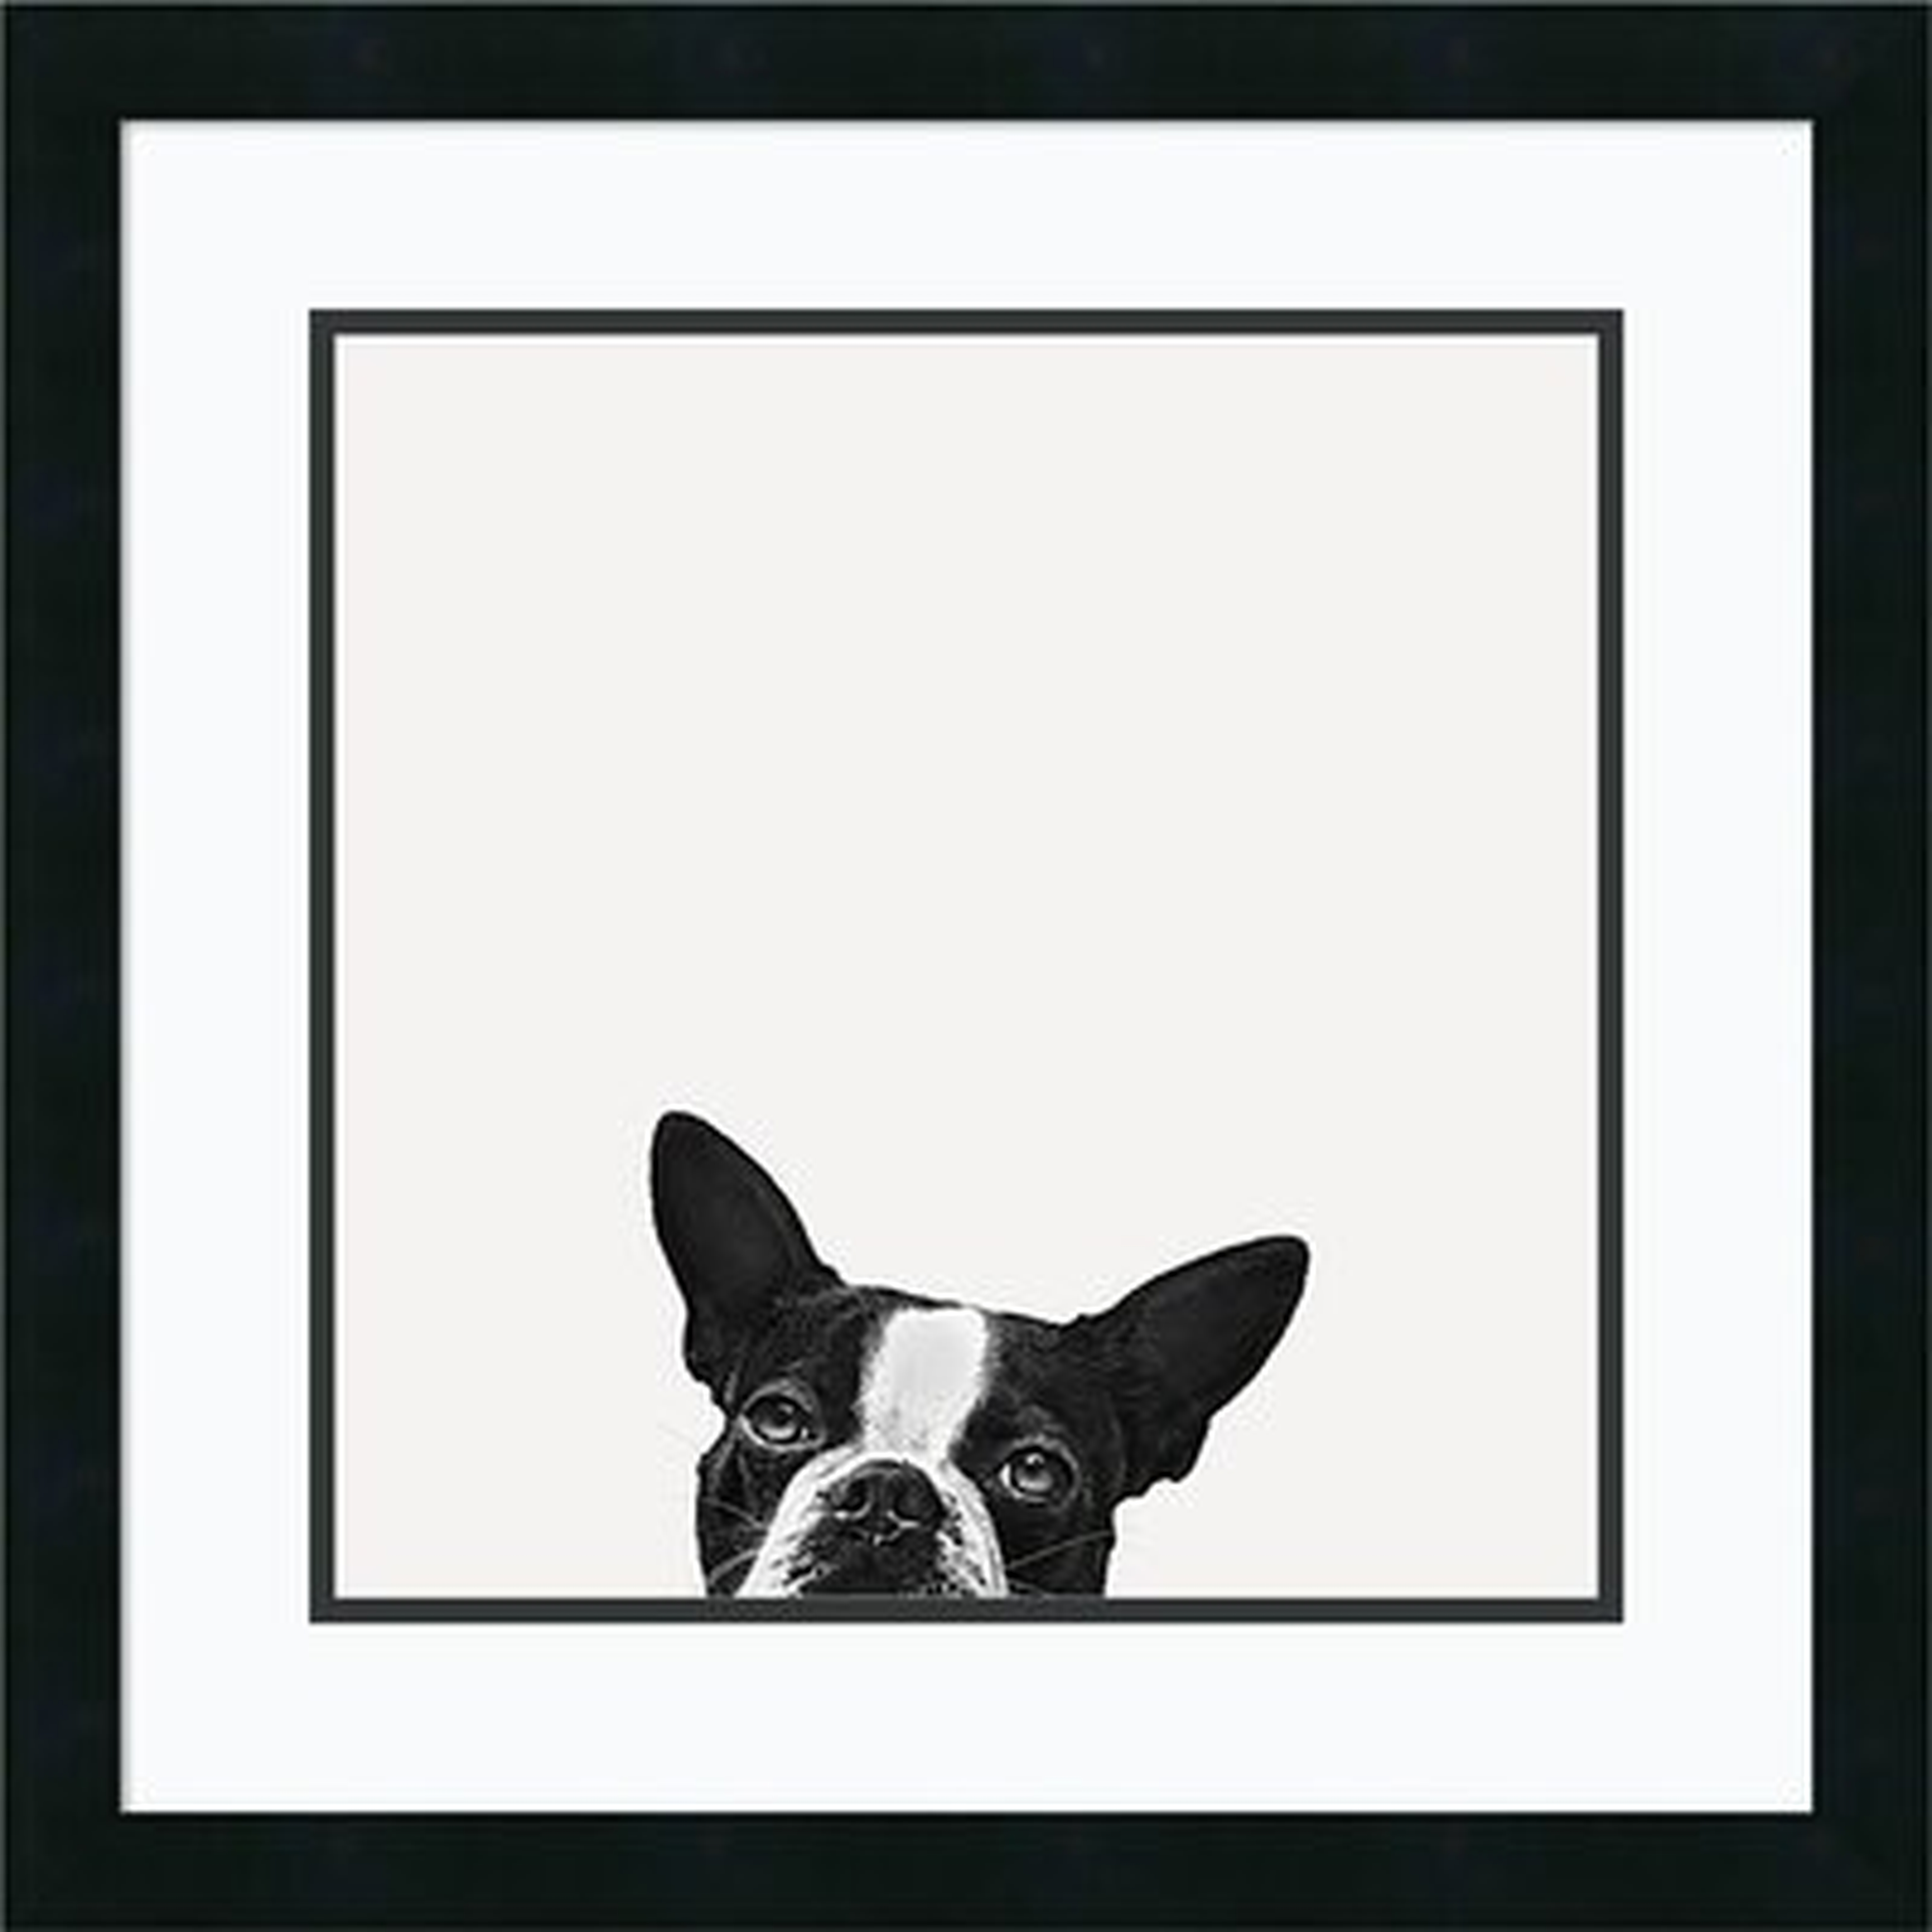 Framed Art Print 'Loyalty (Dog)' by Jon Bertelli: Outer Size 22 x 22" by Jon Bertelli - Picture Frame Photograph Print on Paper - AllModern